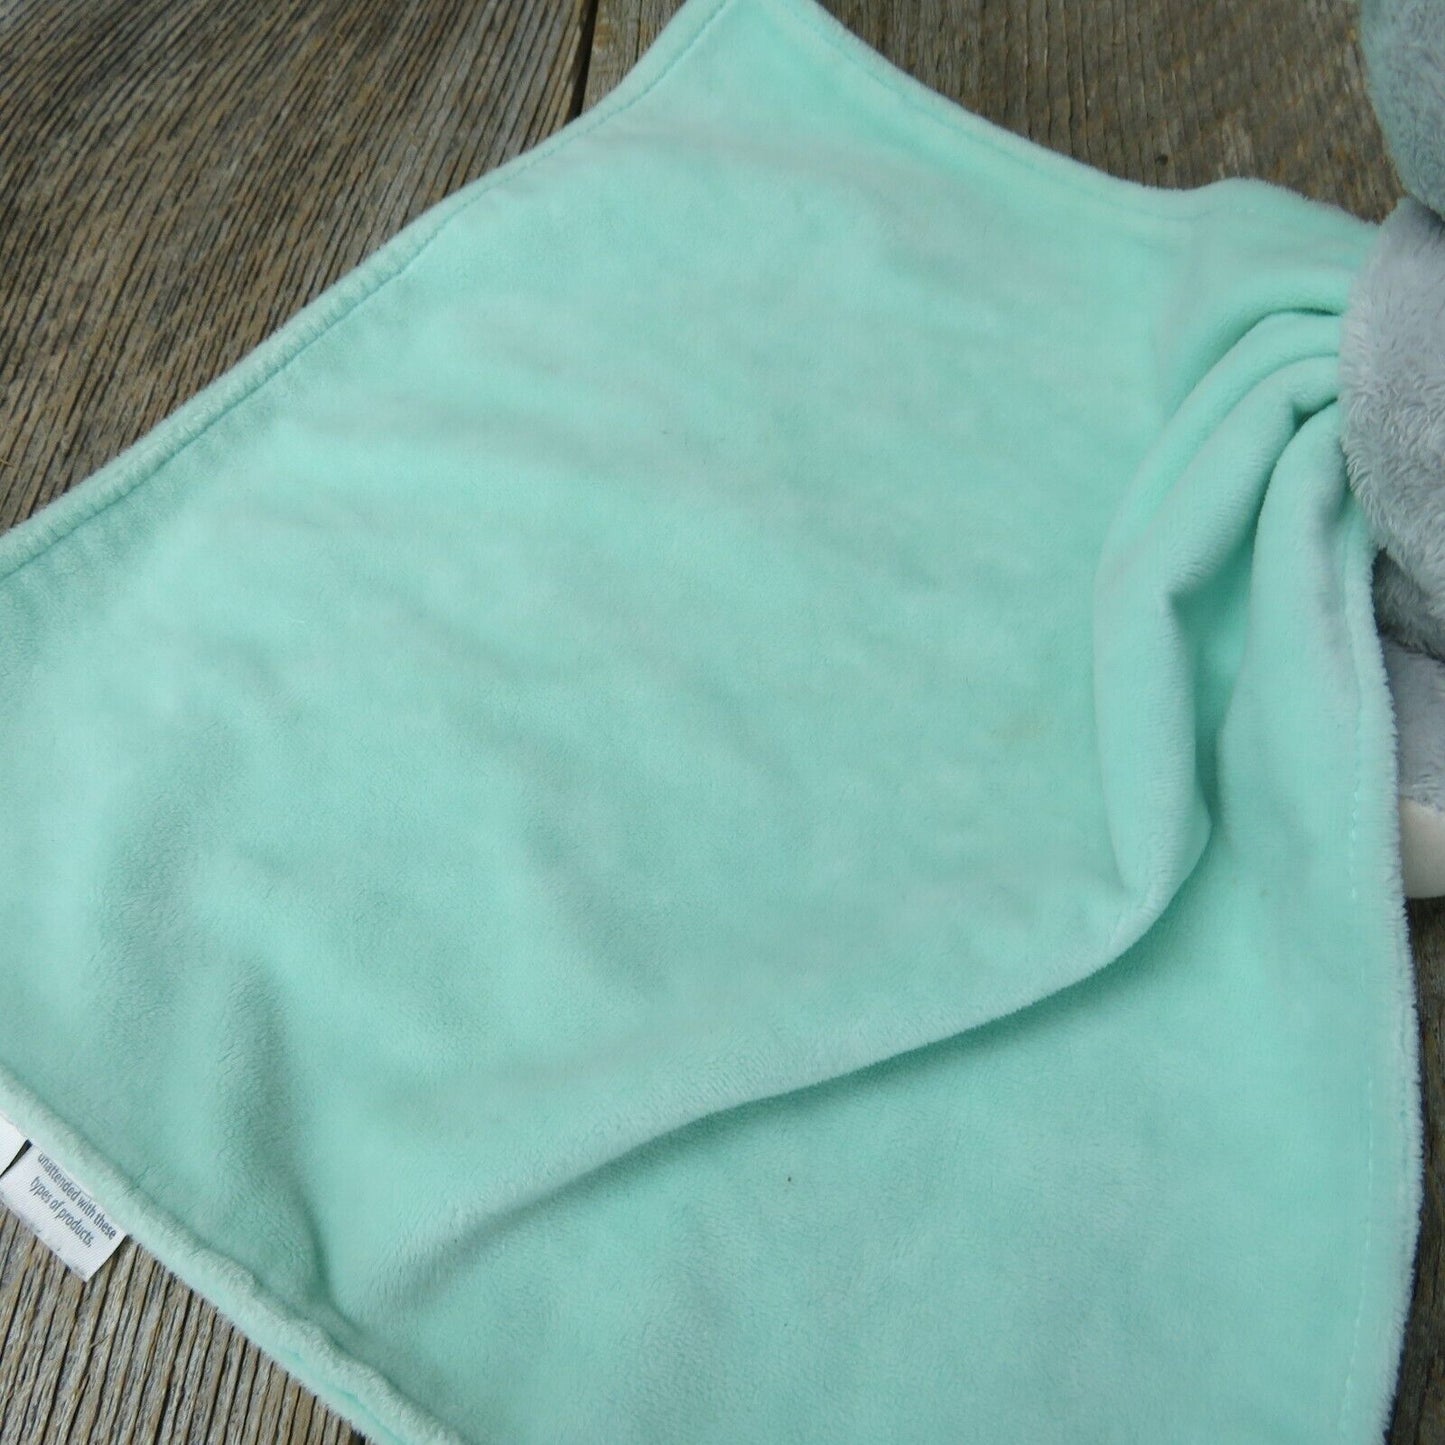 Mouse Plush Blanket Mint Green Lovey Lovie Security Carter's Stuffed Animal